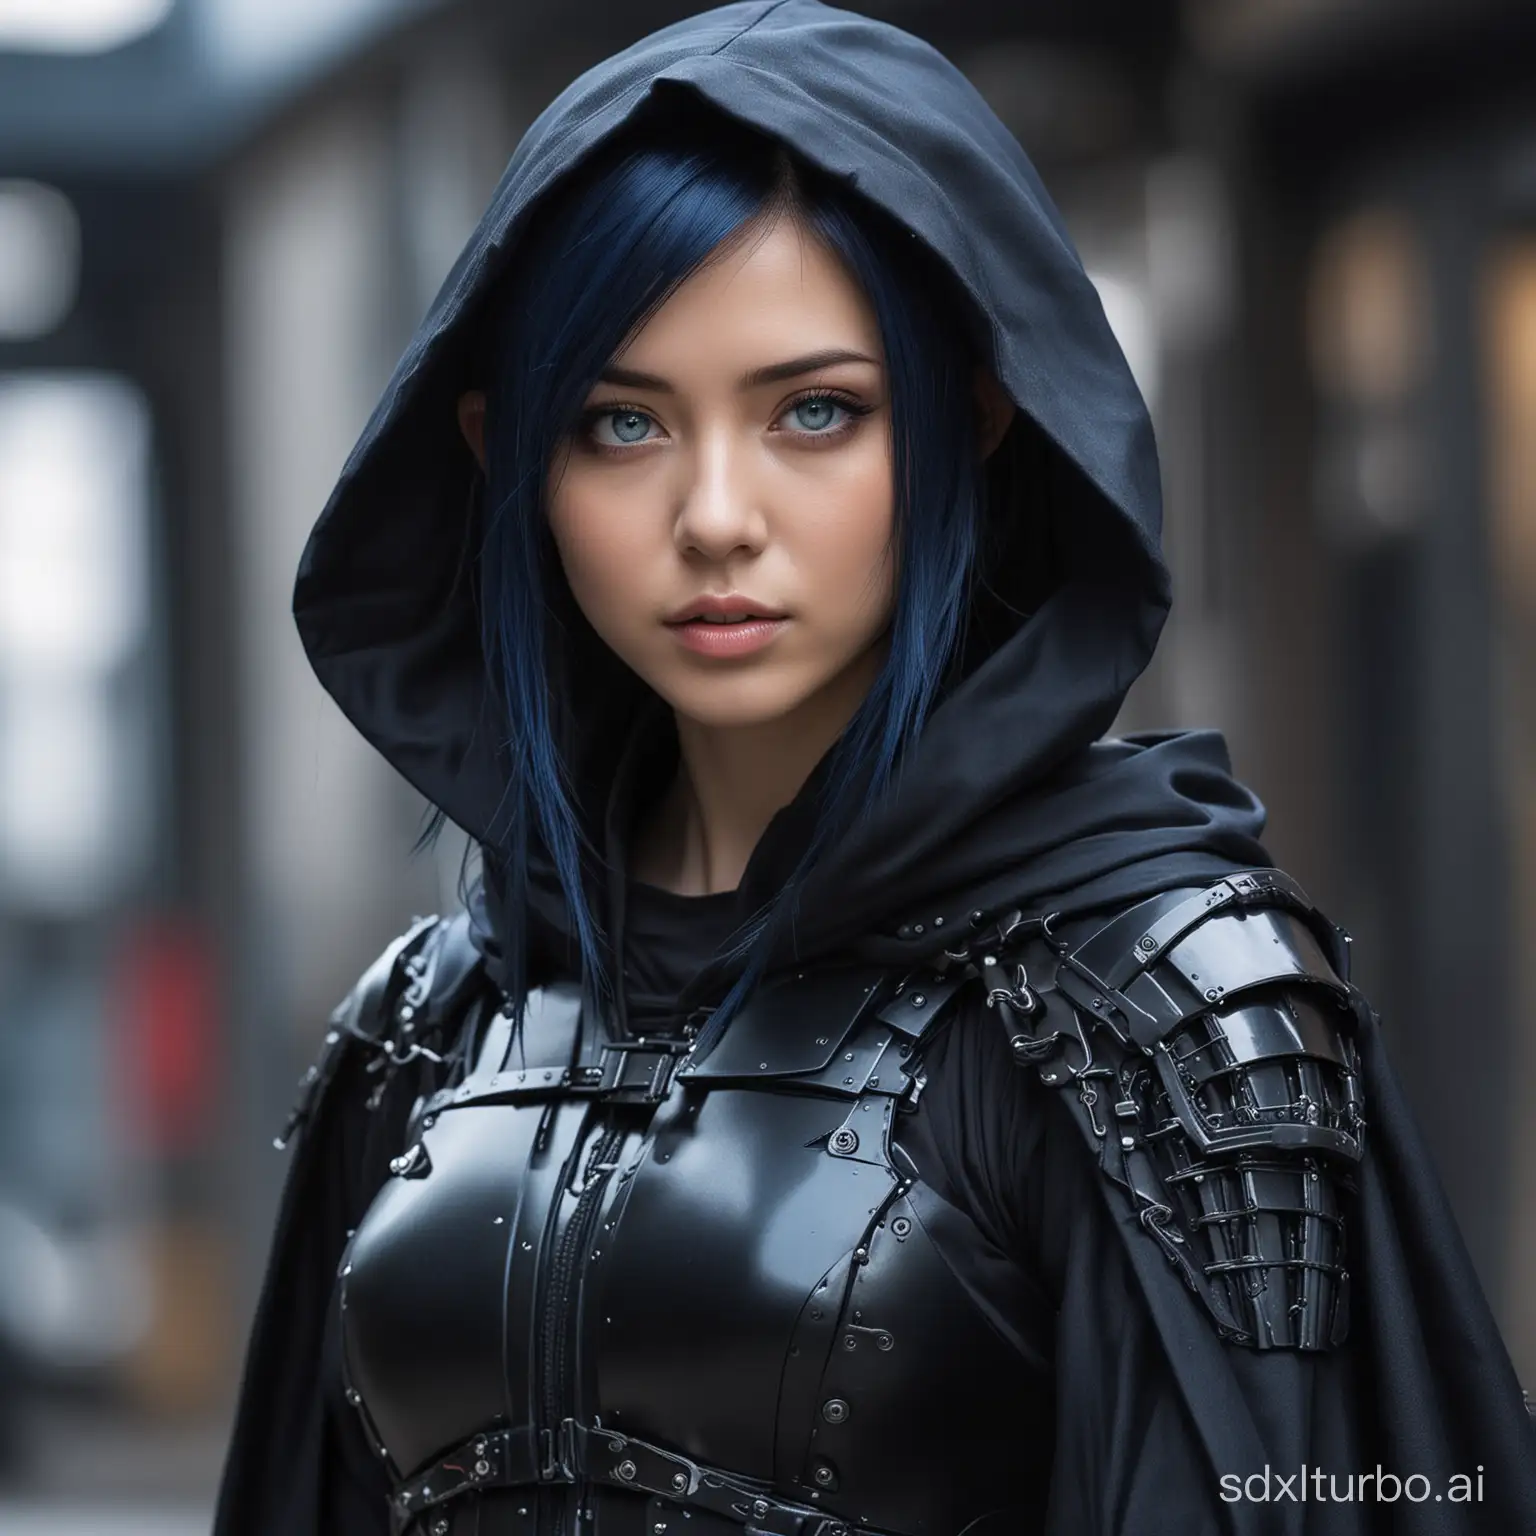 Futuristic-Cyberpunk-Samurai-BlueEyed-GermanJapanese-Elf-in-Black-Armor-with-Hooded-Cape